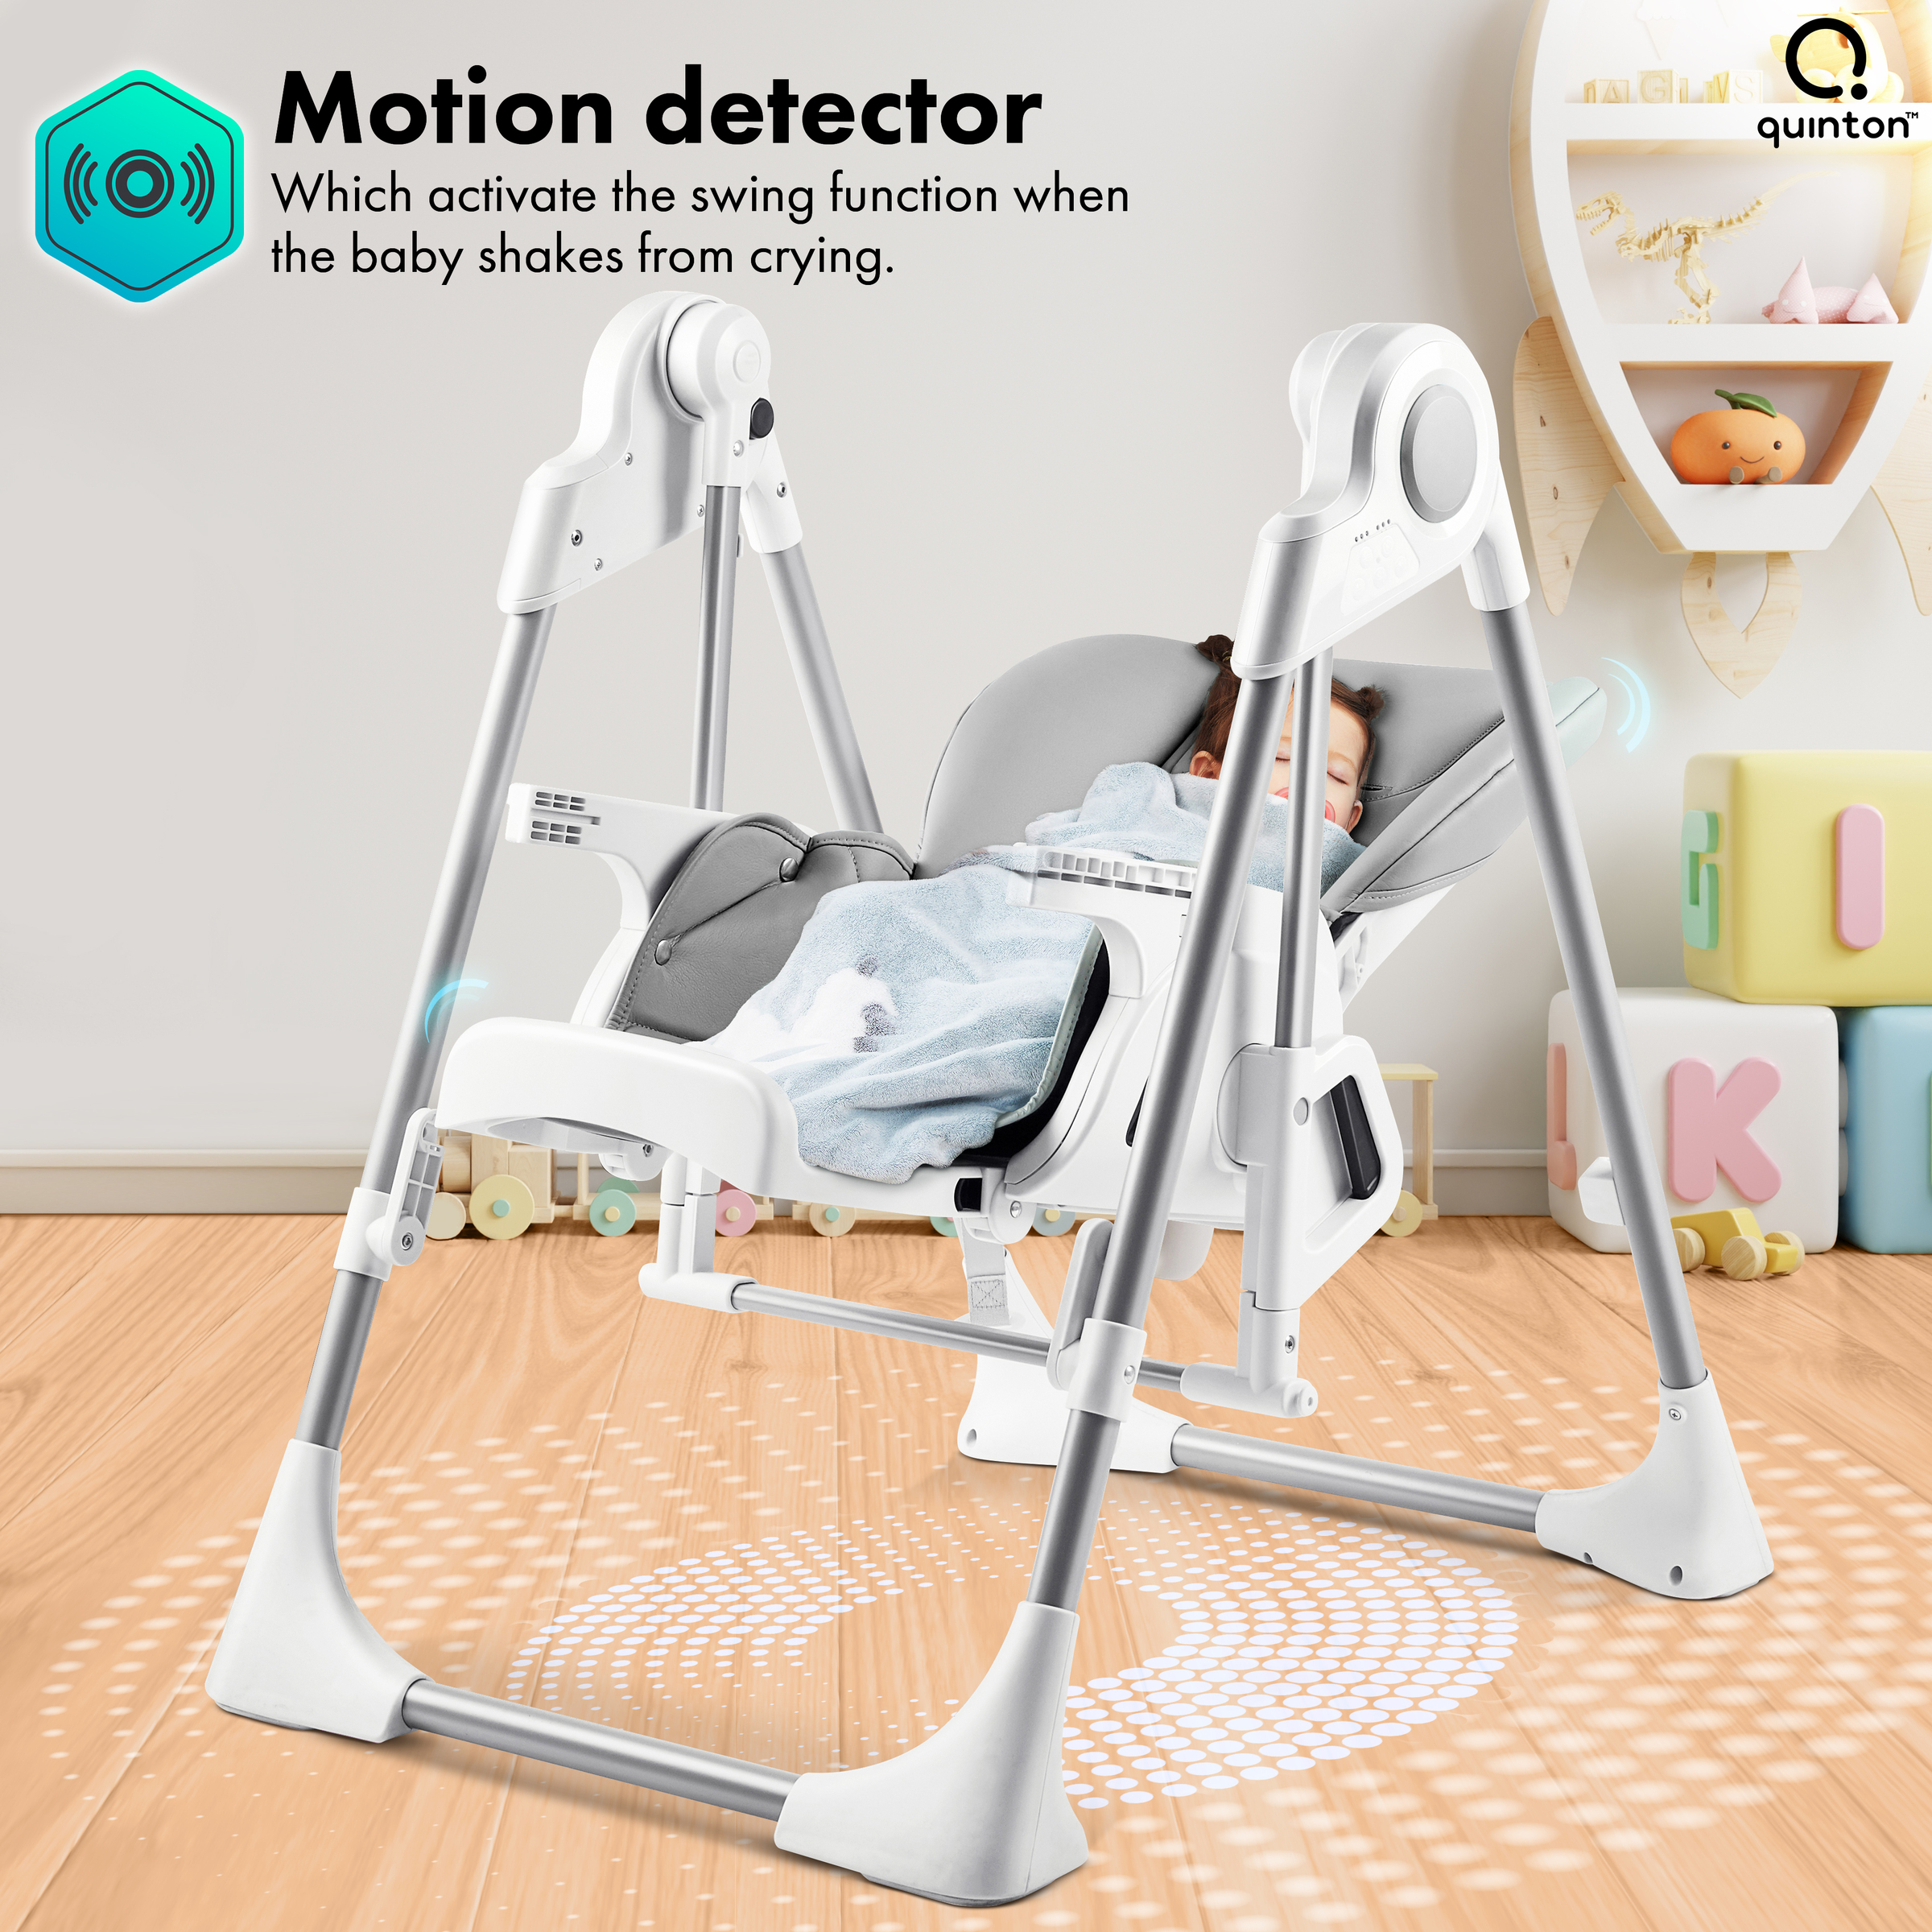 5. motion detector